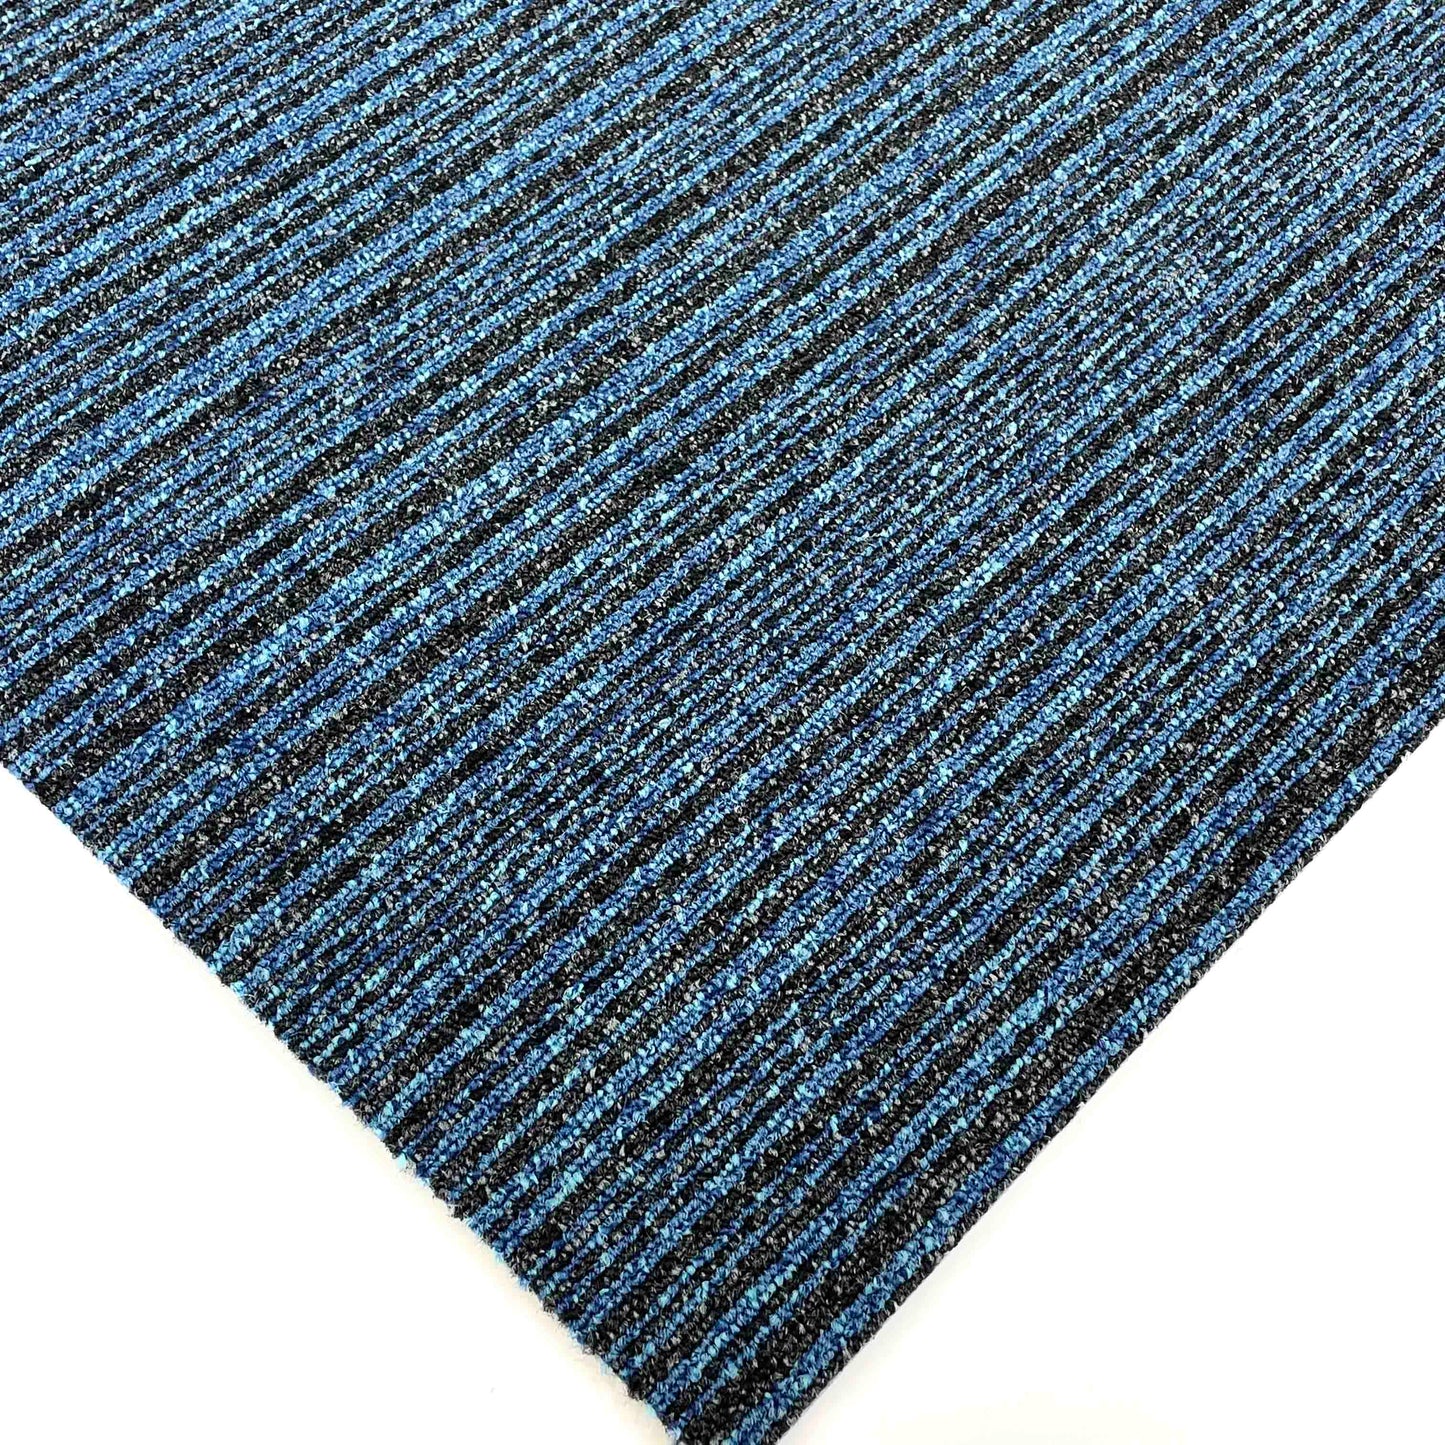 Blue and Black Stripe Carpet Tiles